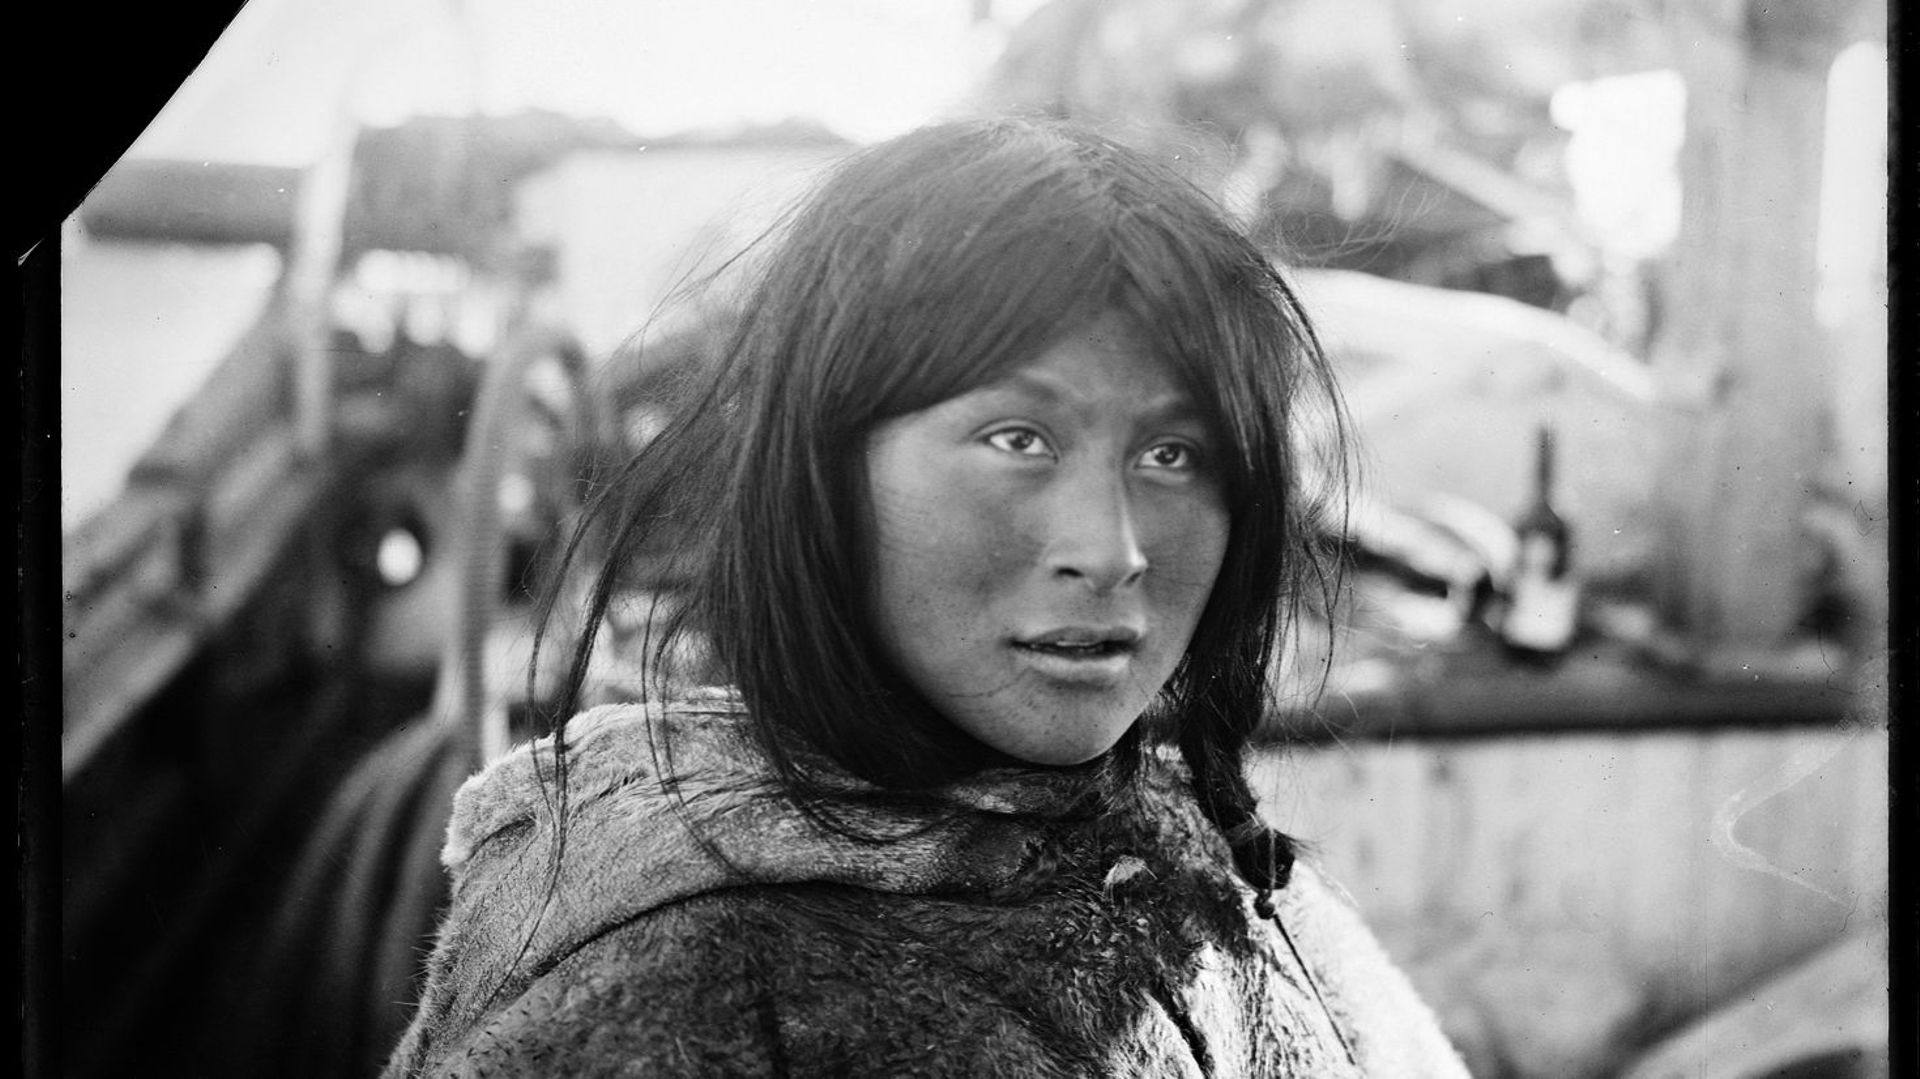 Portrait de Magito, jeune Inuit de Netsilik, Nunavut/Canada, anonyme, 1903-1905, Bibliothèque nationale de Norvège.